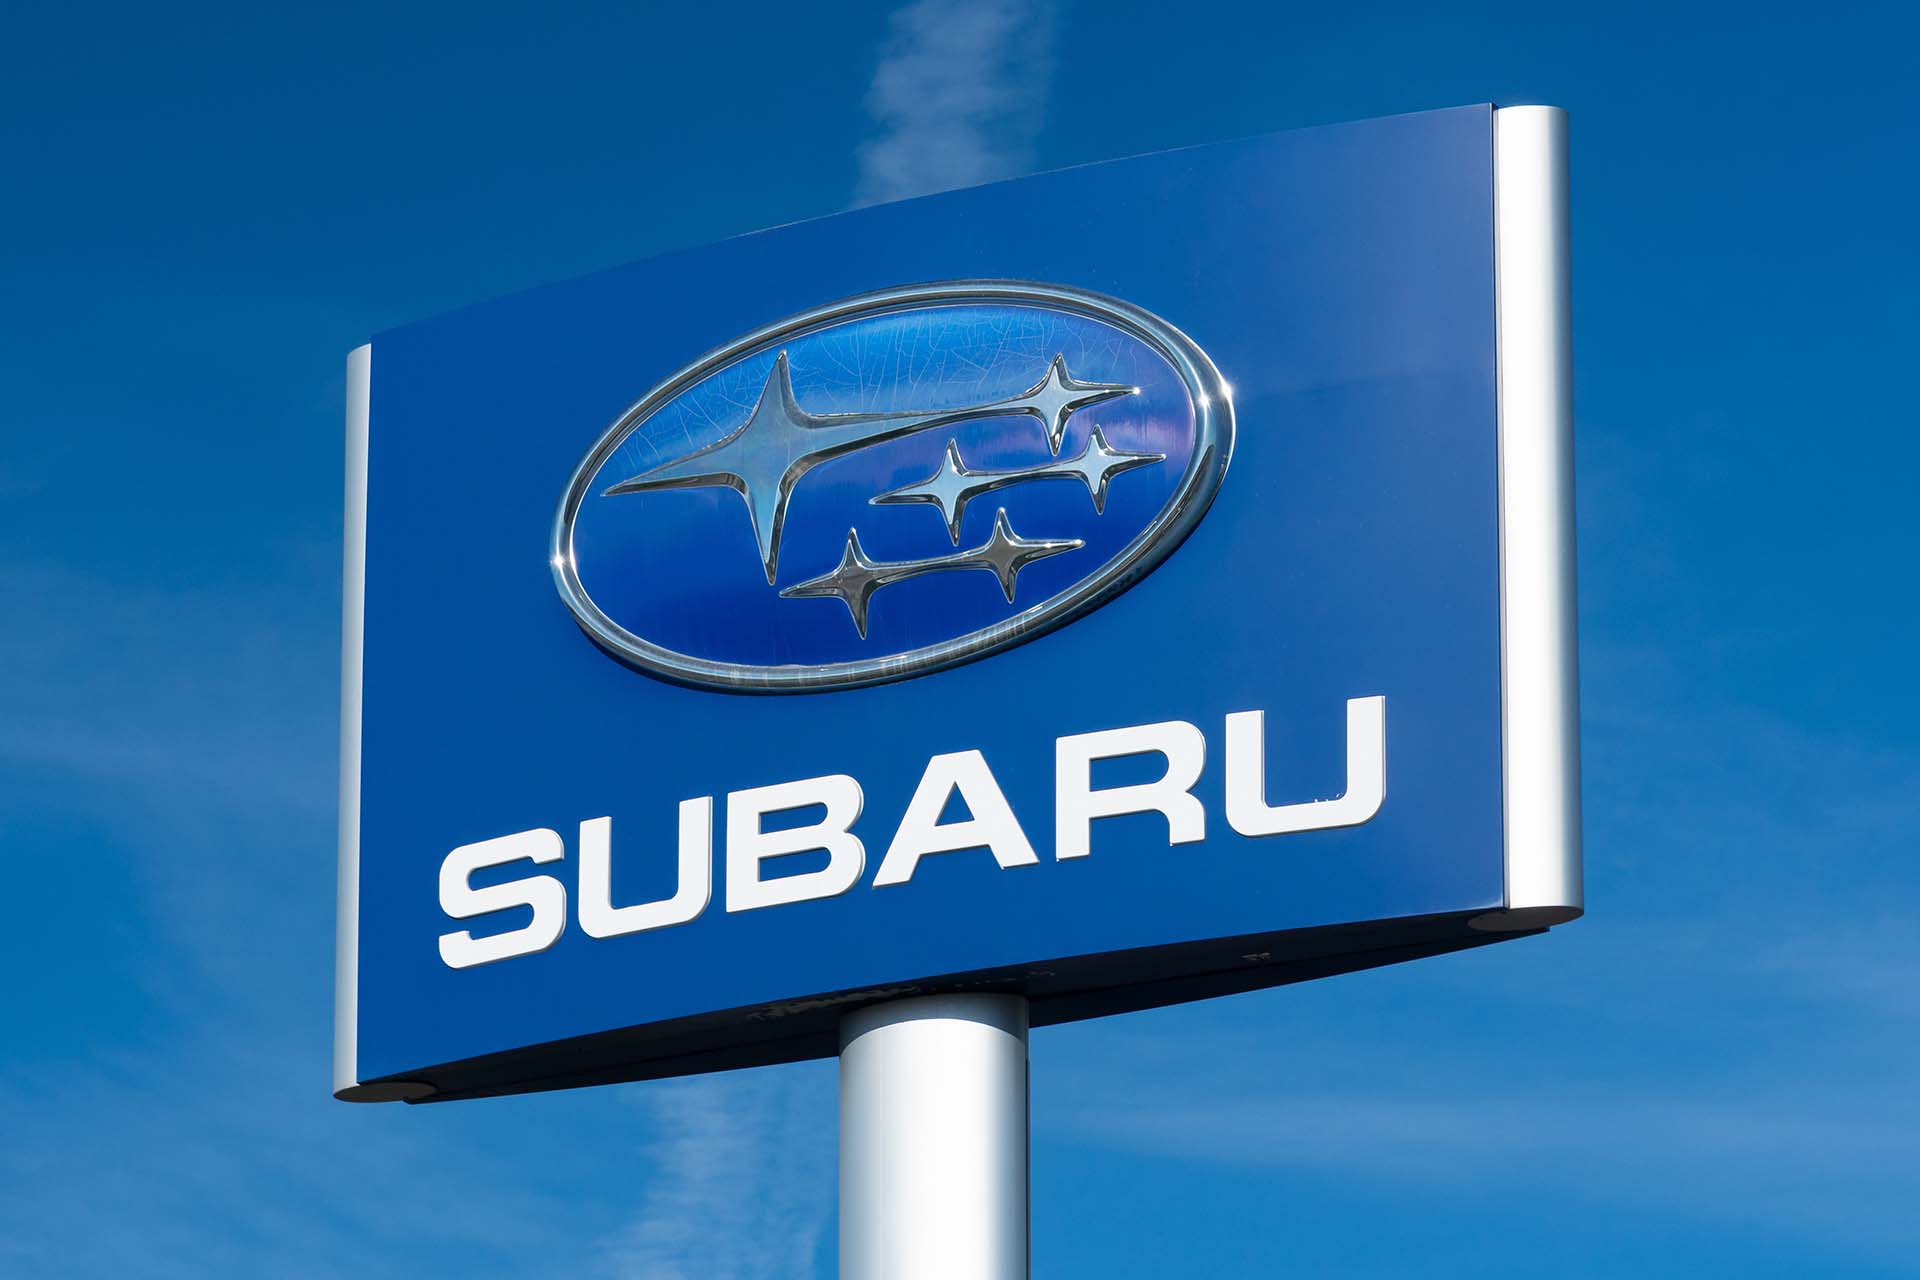 Subaru automobile dealership and trademark logo.